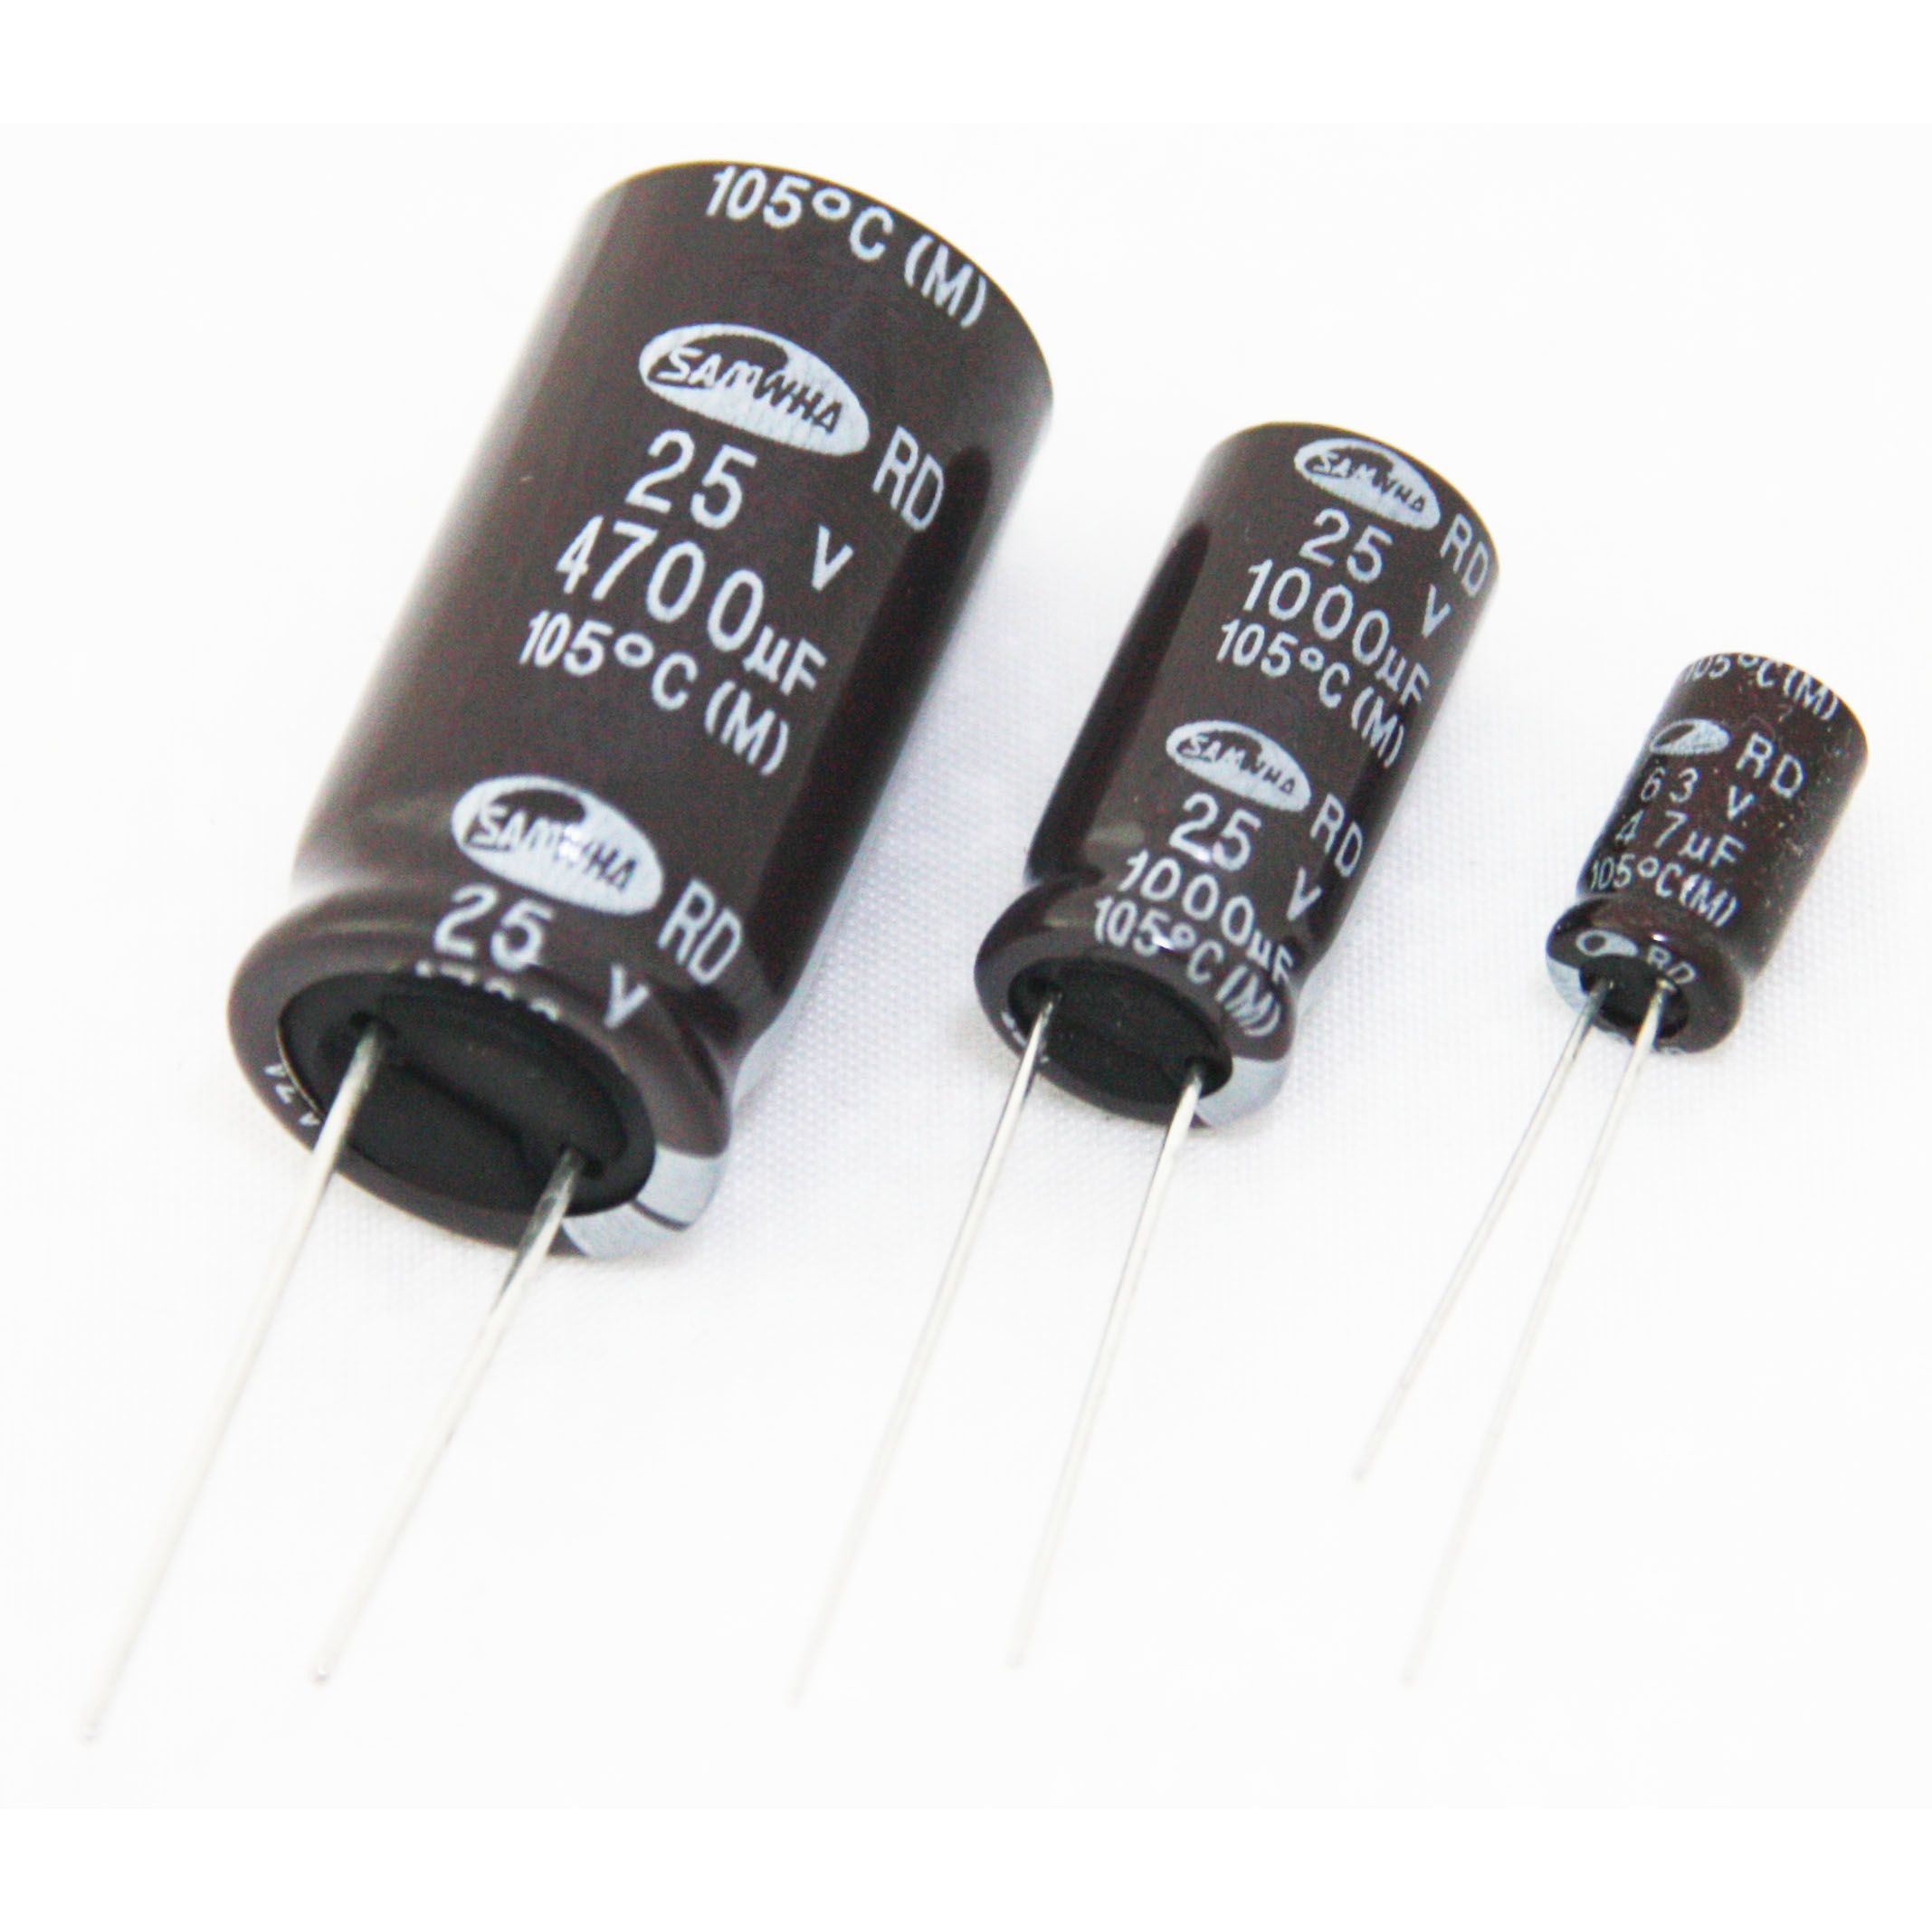 Electrolytic capacitor 105° 2200uF-50V